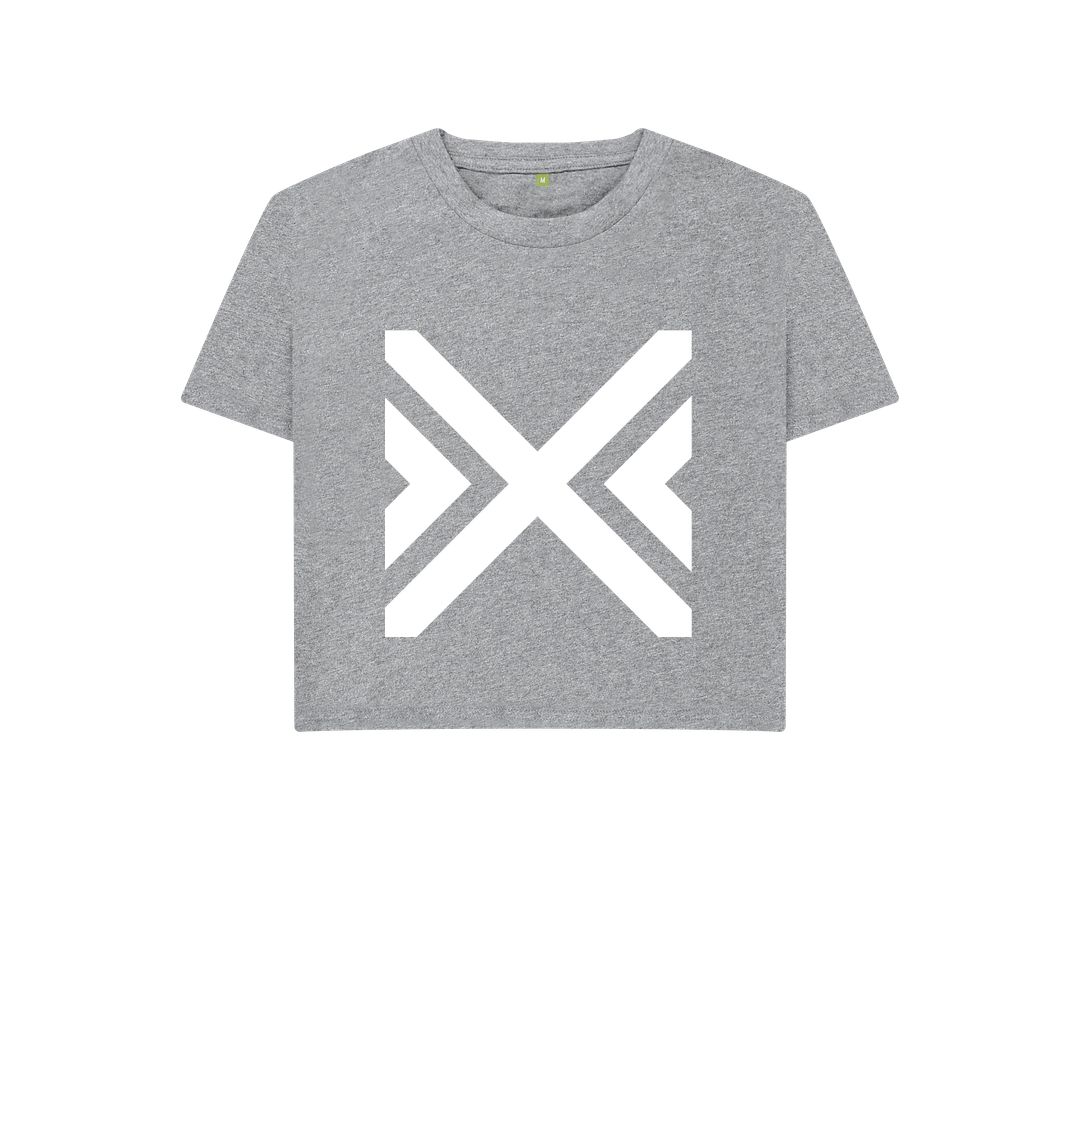 Athletic Grey Cross T-shirts - Women's Boxy Tees